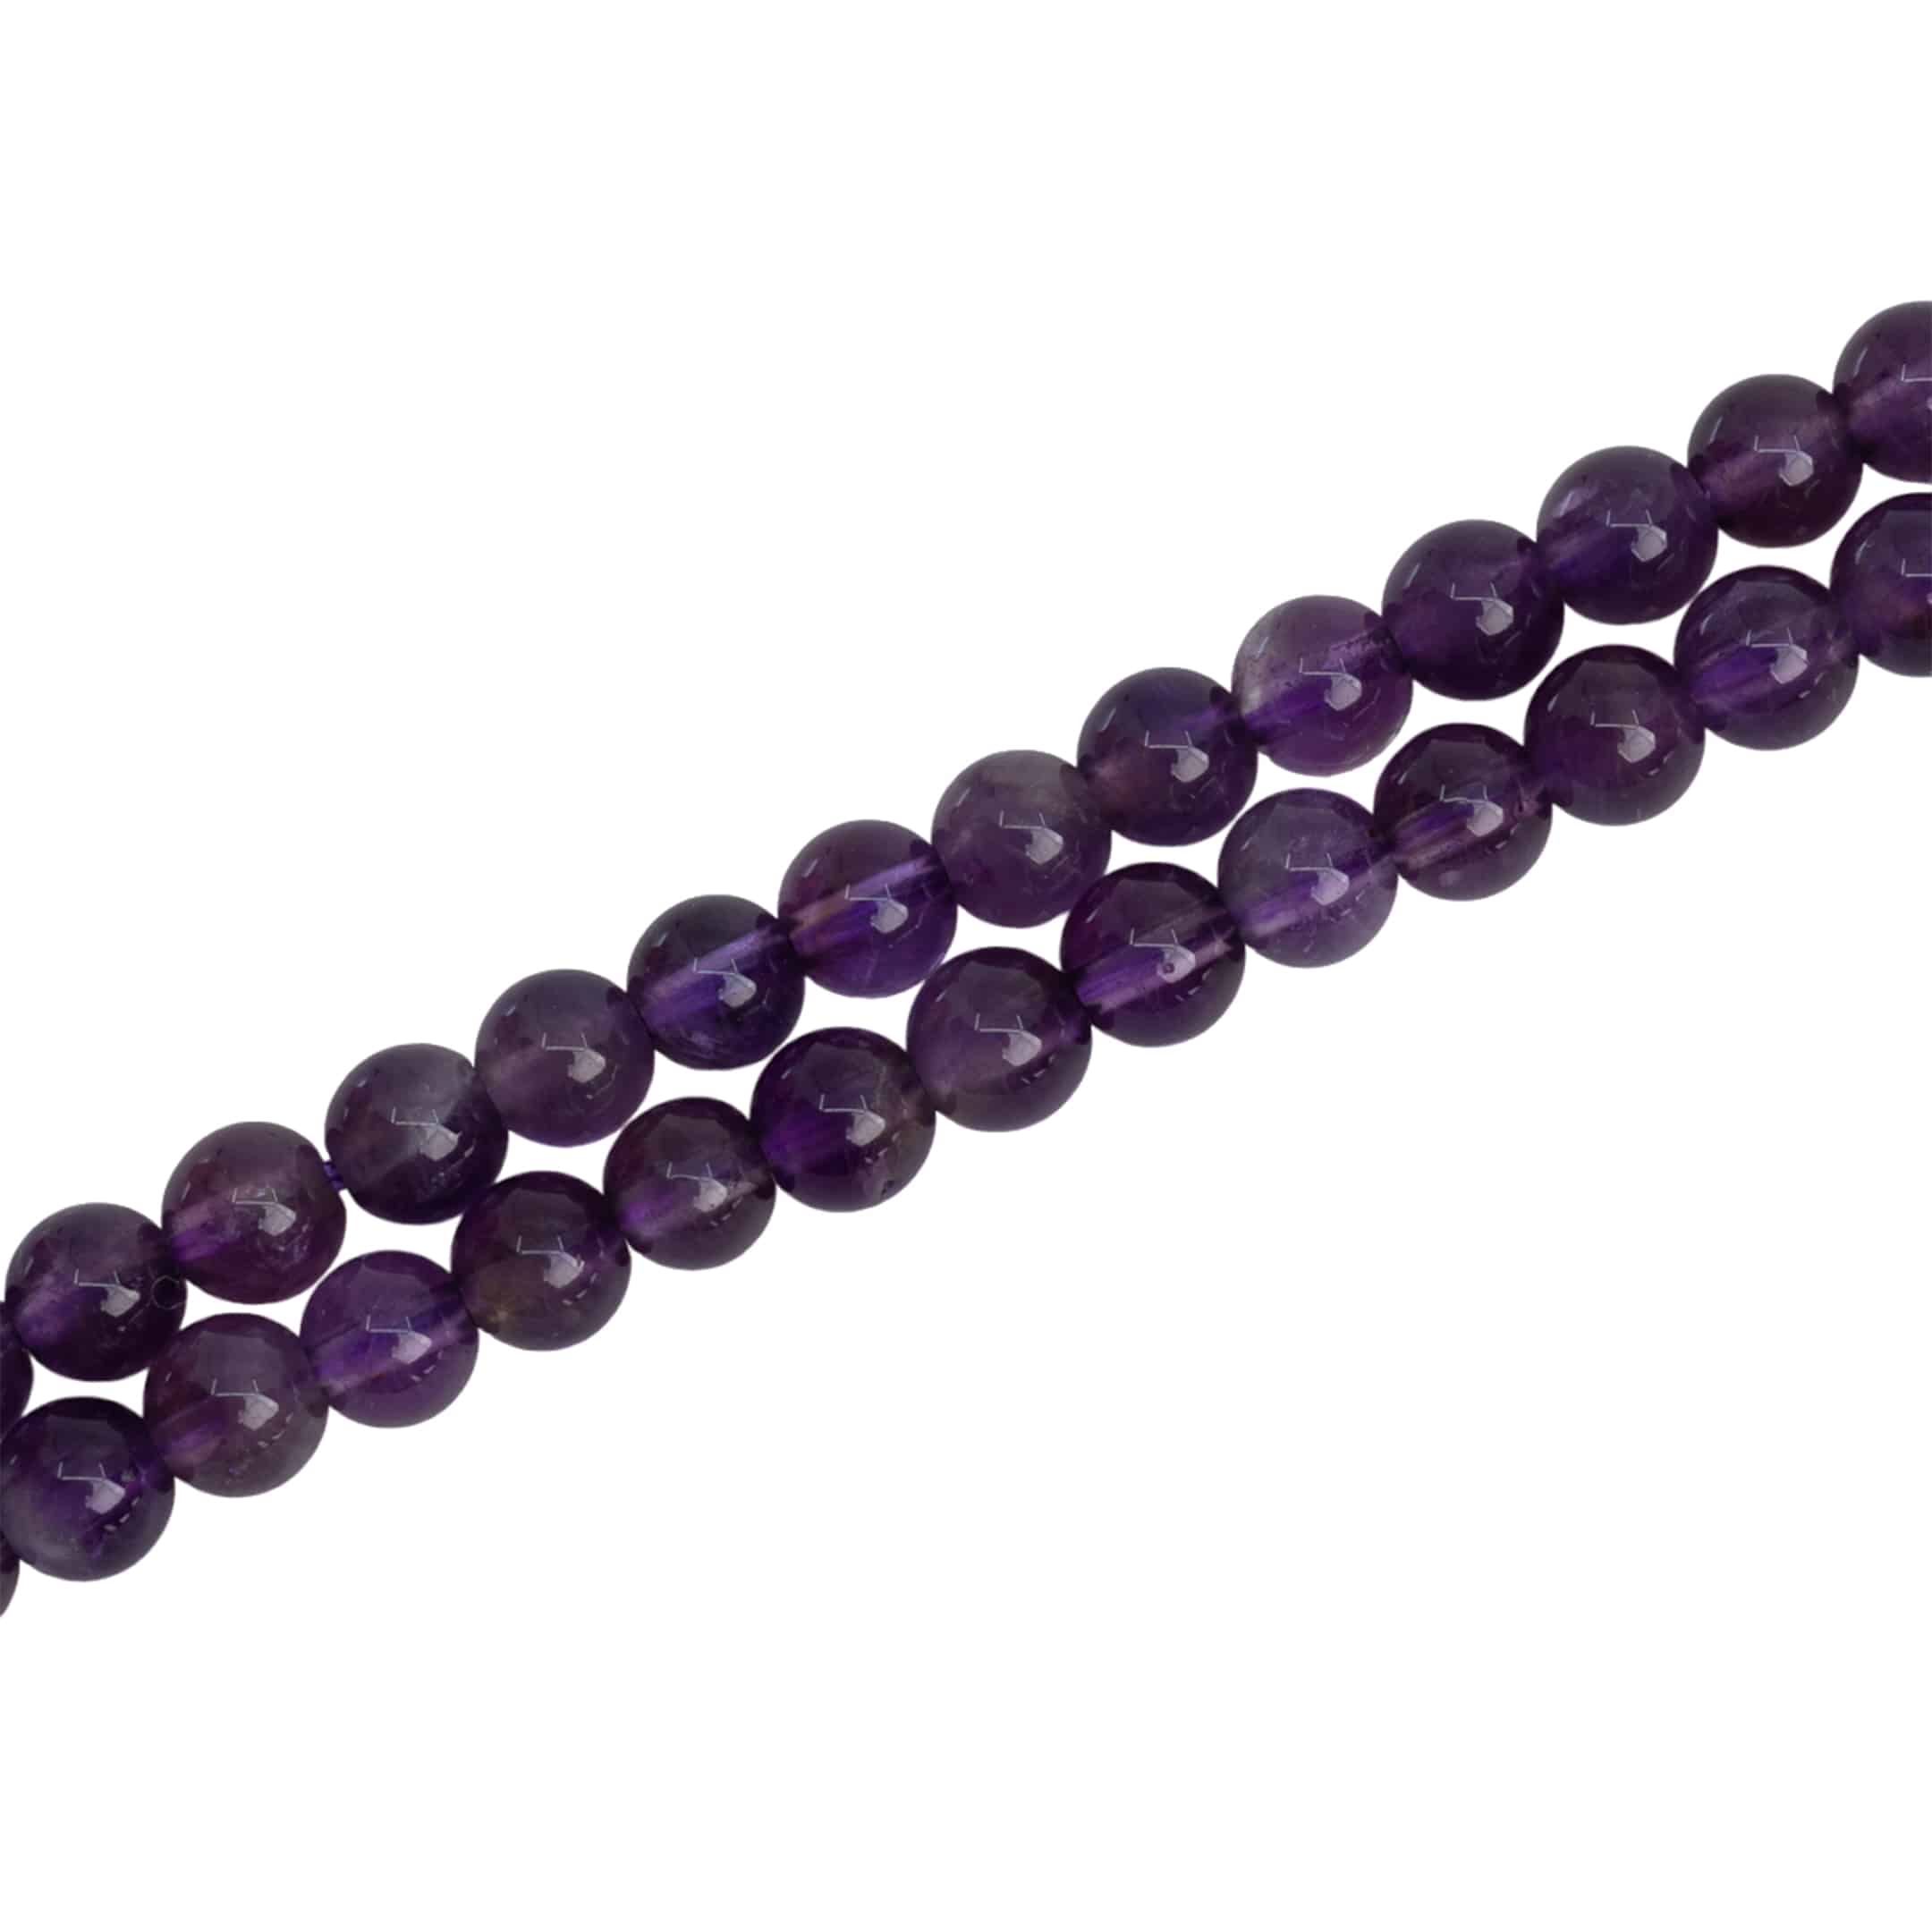 Perles de la Pierre Précieuse Améthyste (4 mm)